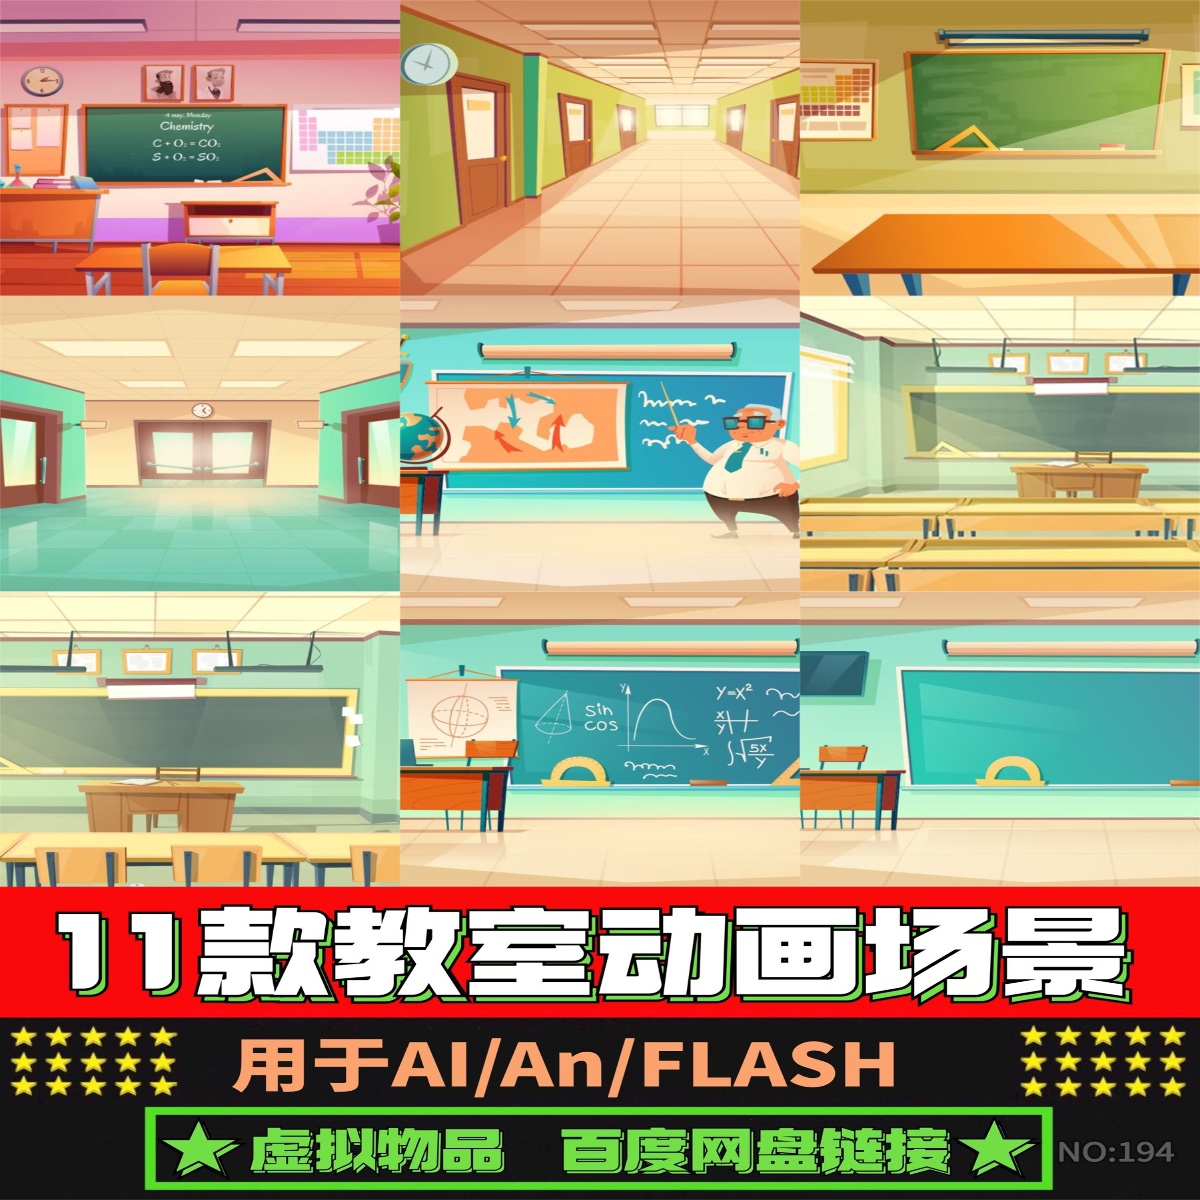 AI/AN/FLASH沙雕动画动漫教室黑板学校场景背景素材矢量图可编辑